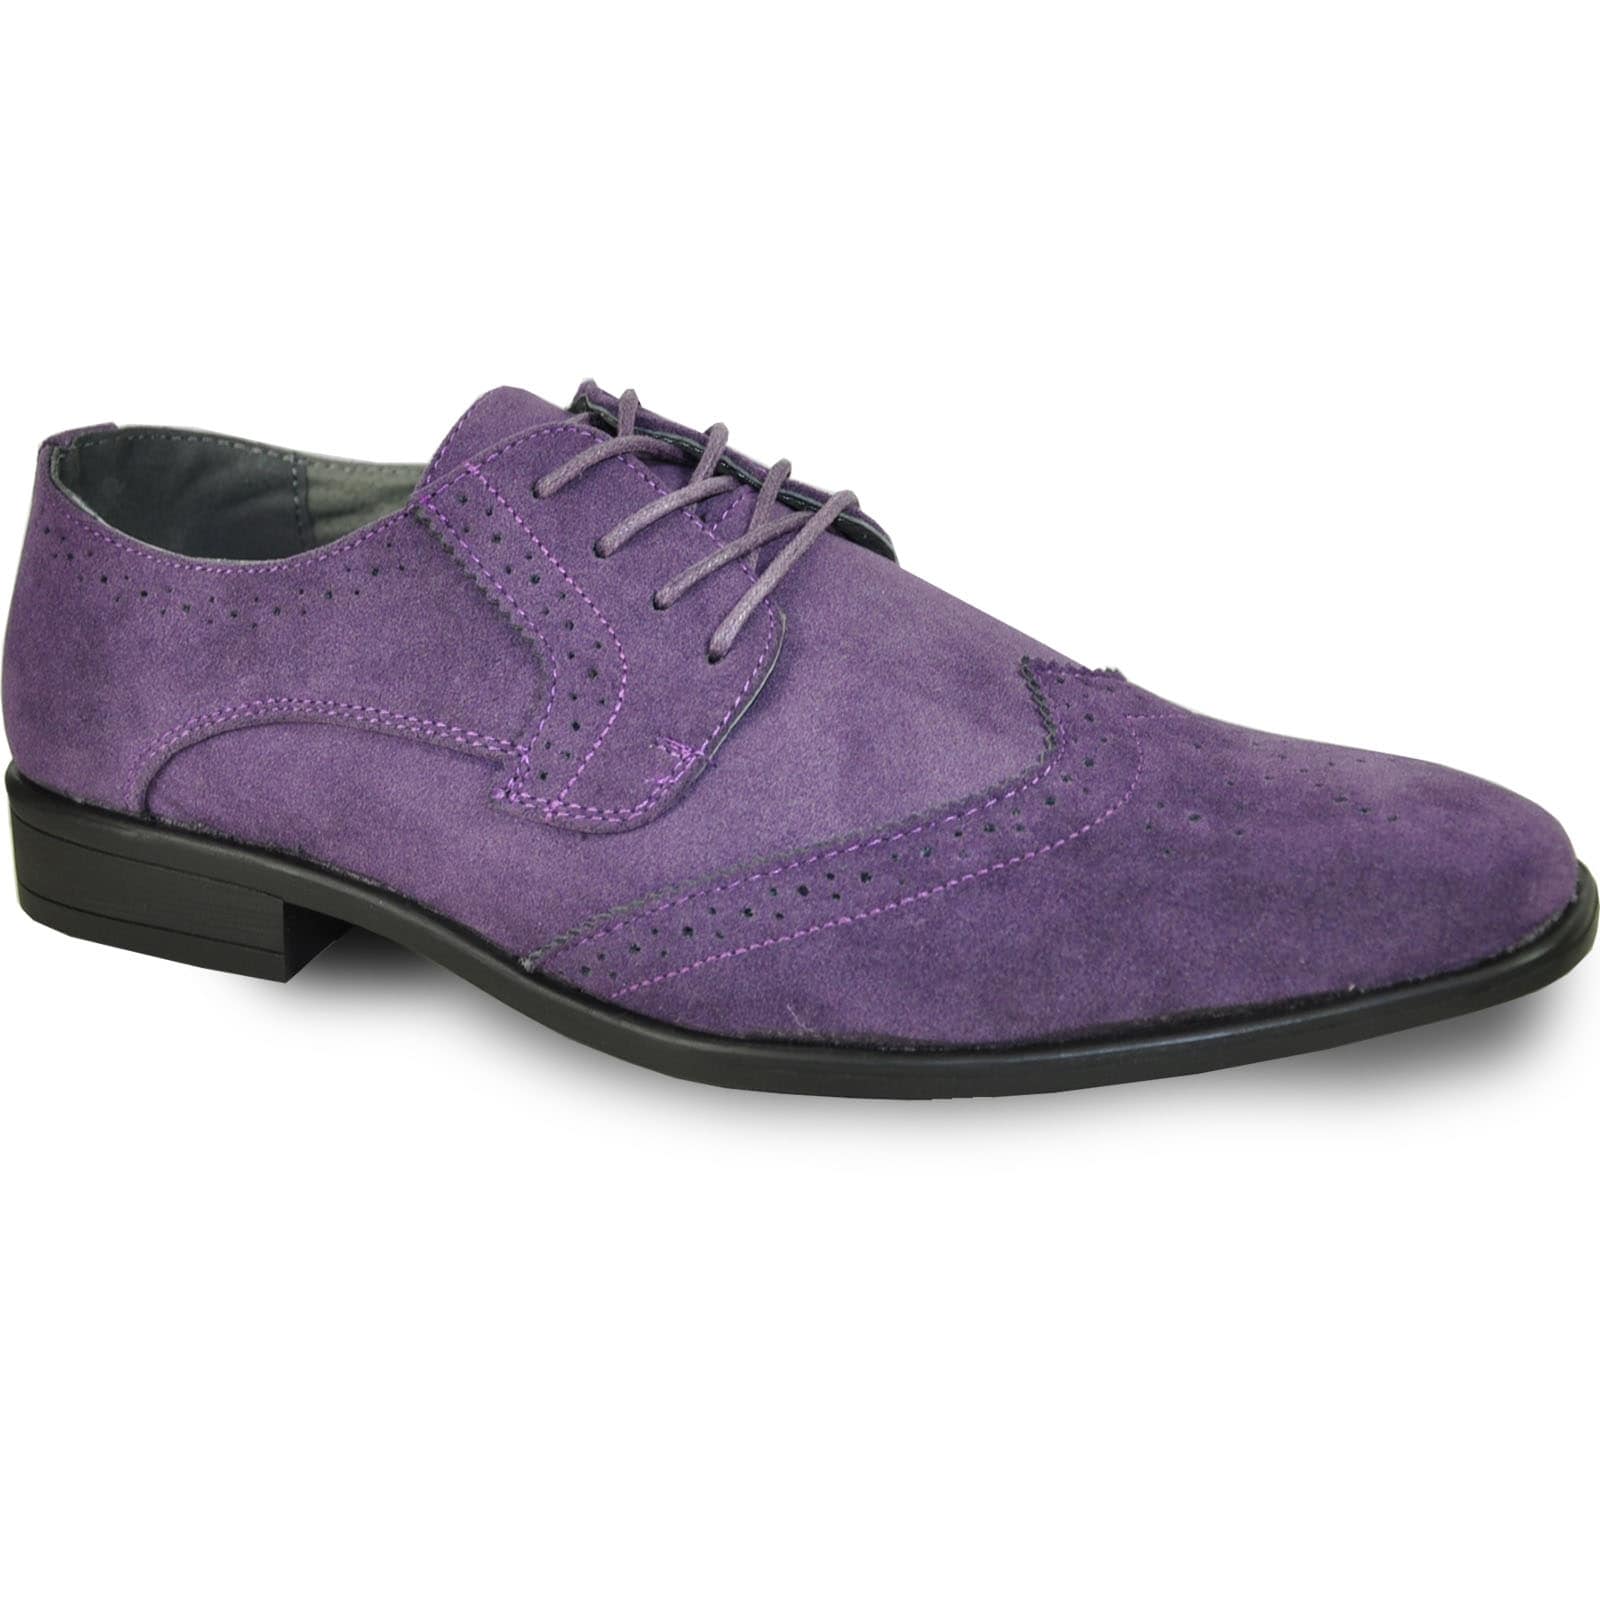 purple dress shoes mens near me